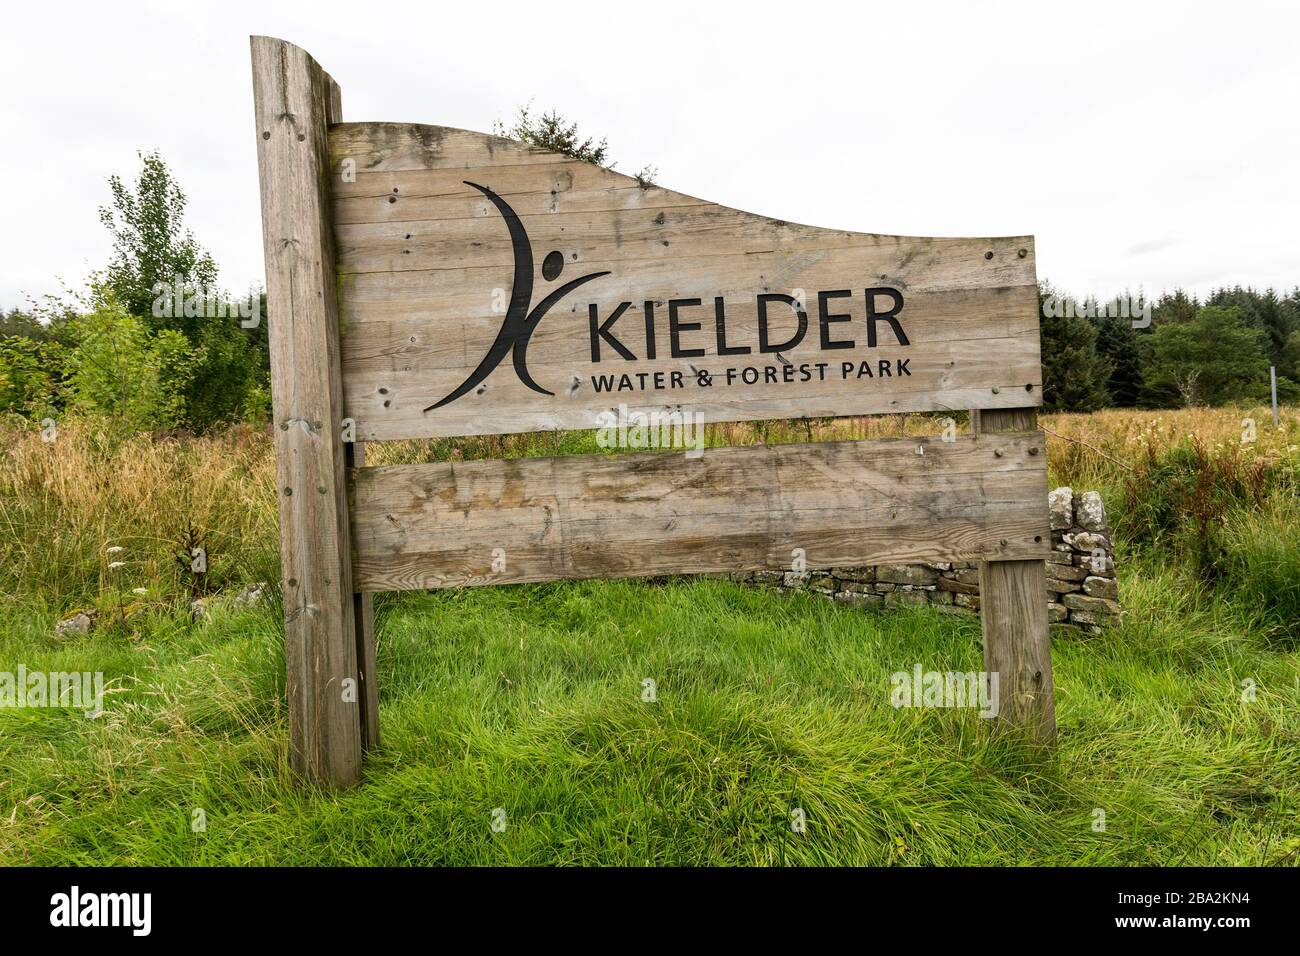 Kielder water and forest park sign, Kielder, Northumberland, UK Stock Photo